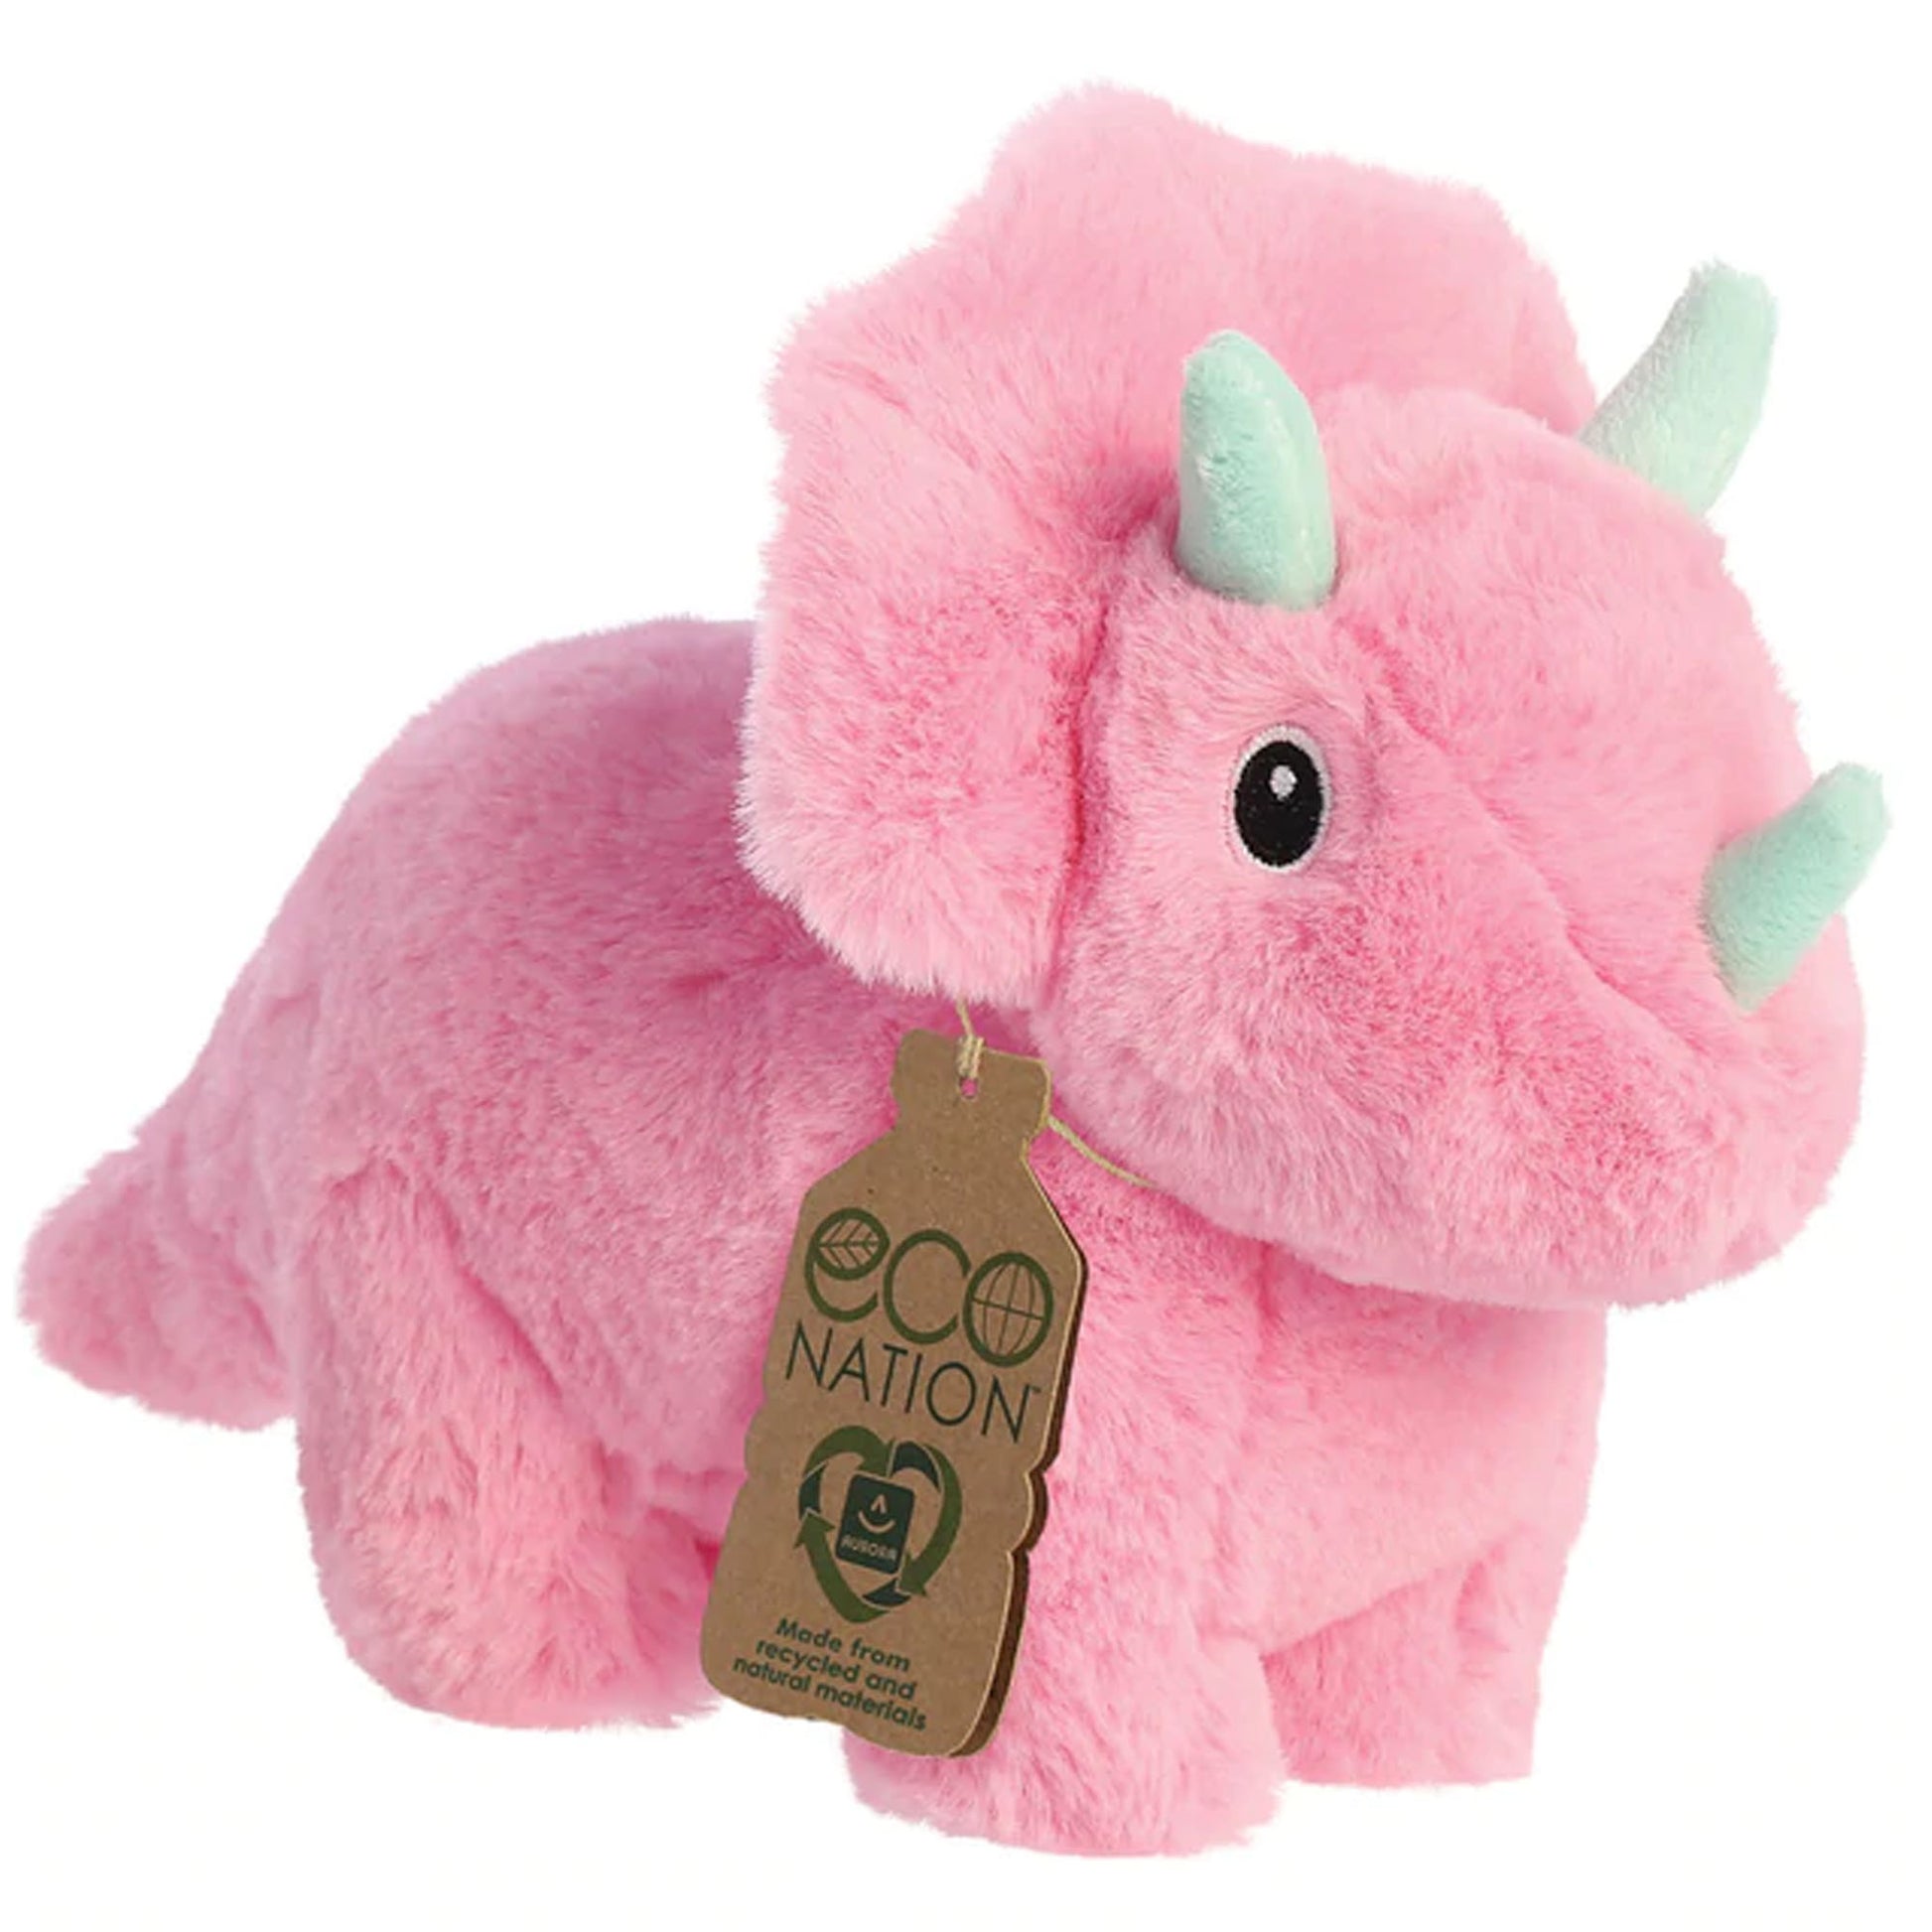 Eco Nation Kawaii Pink Triceratops Soft Toy | Happy Piranha